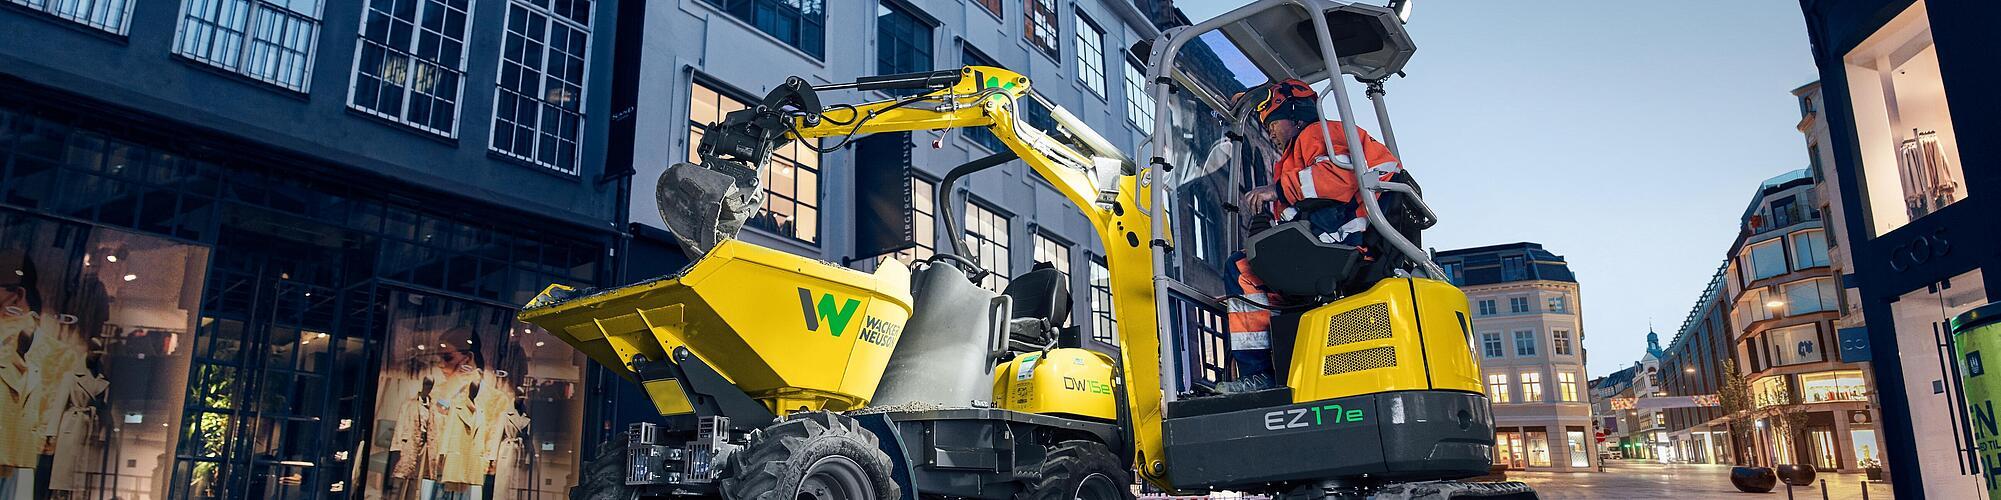 Wacker Neuson zero tail excavator EZ17e in application on a construction site in the city.